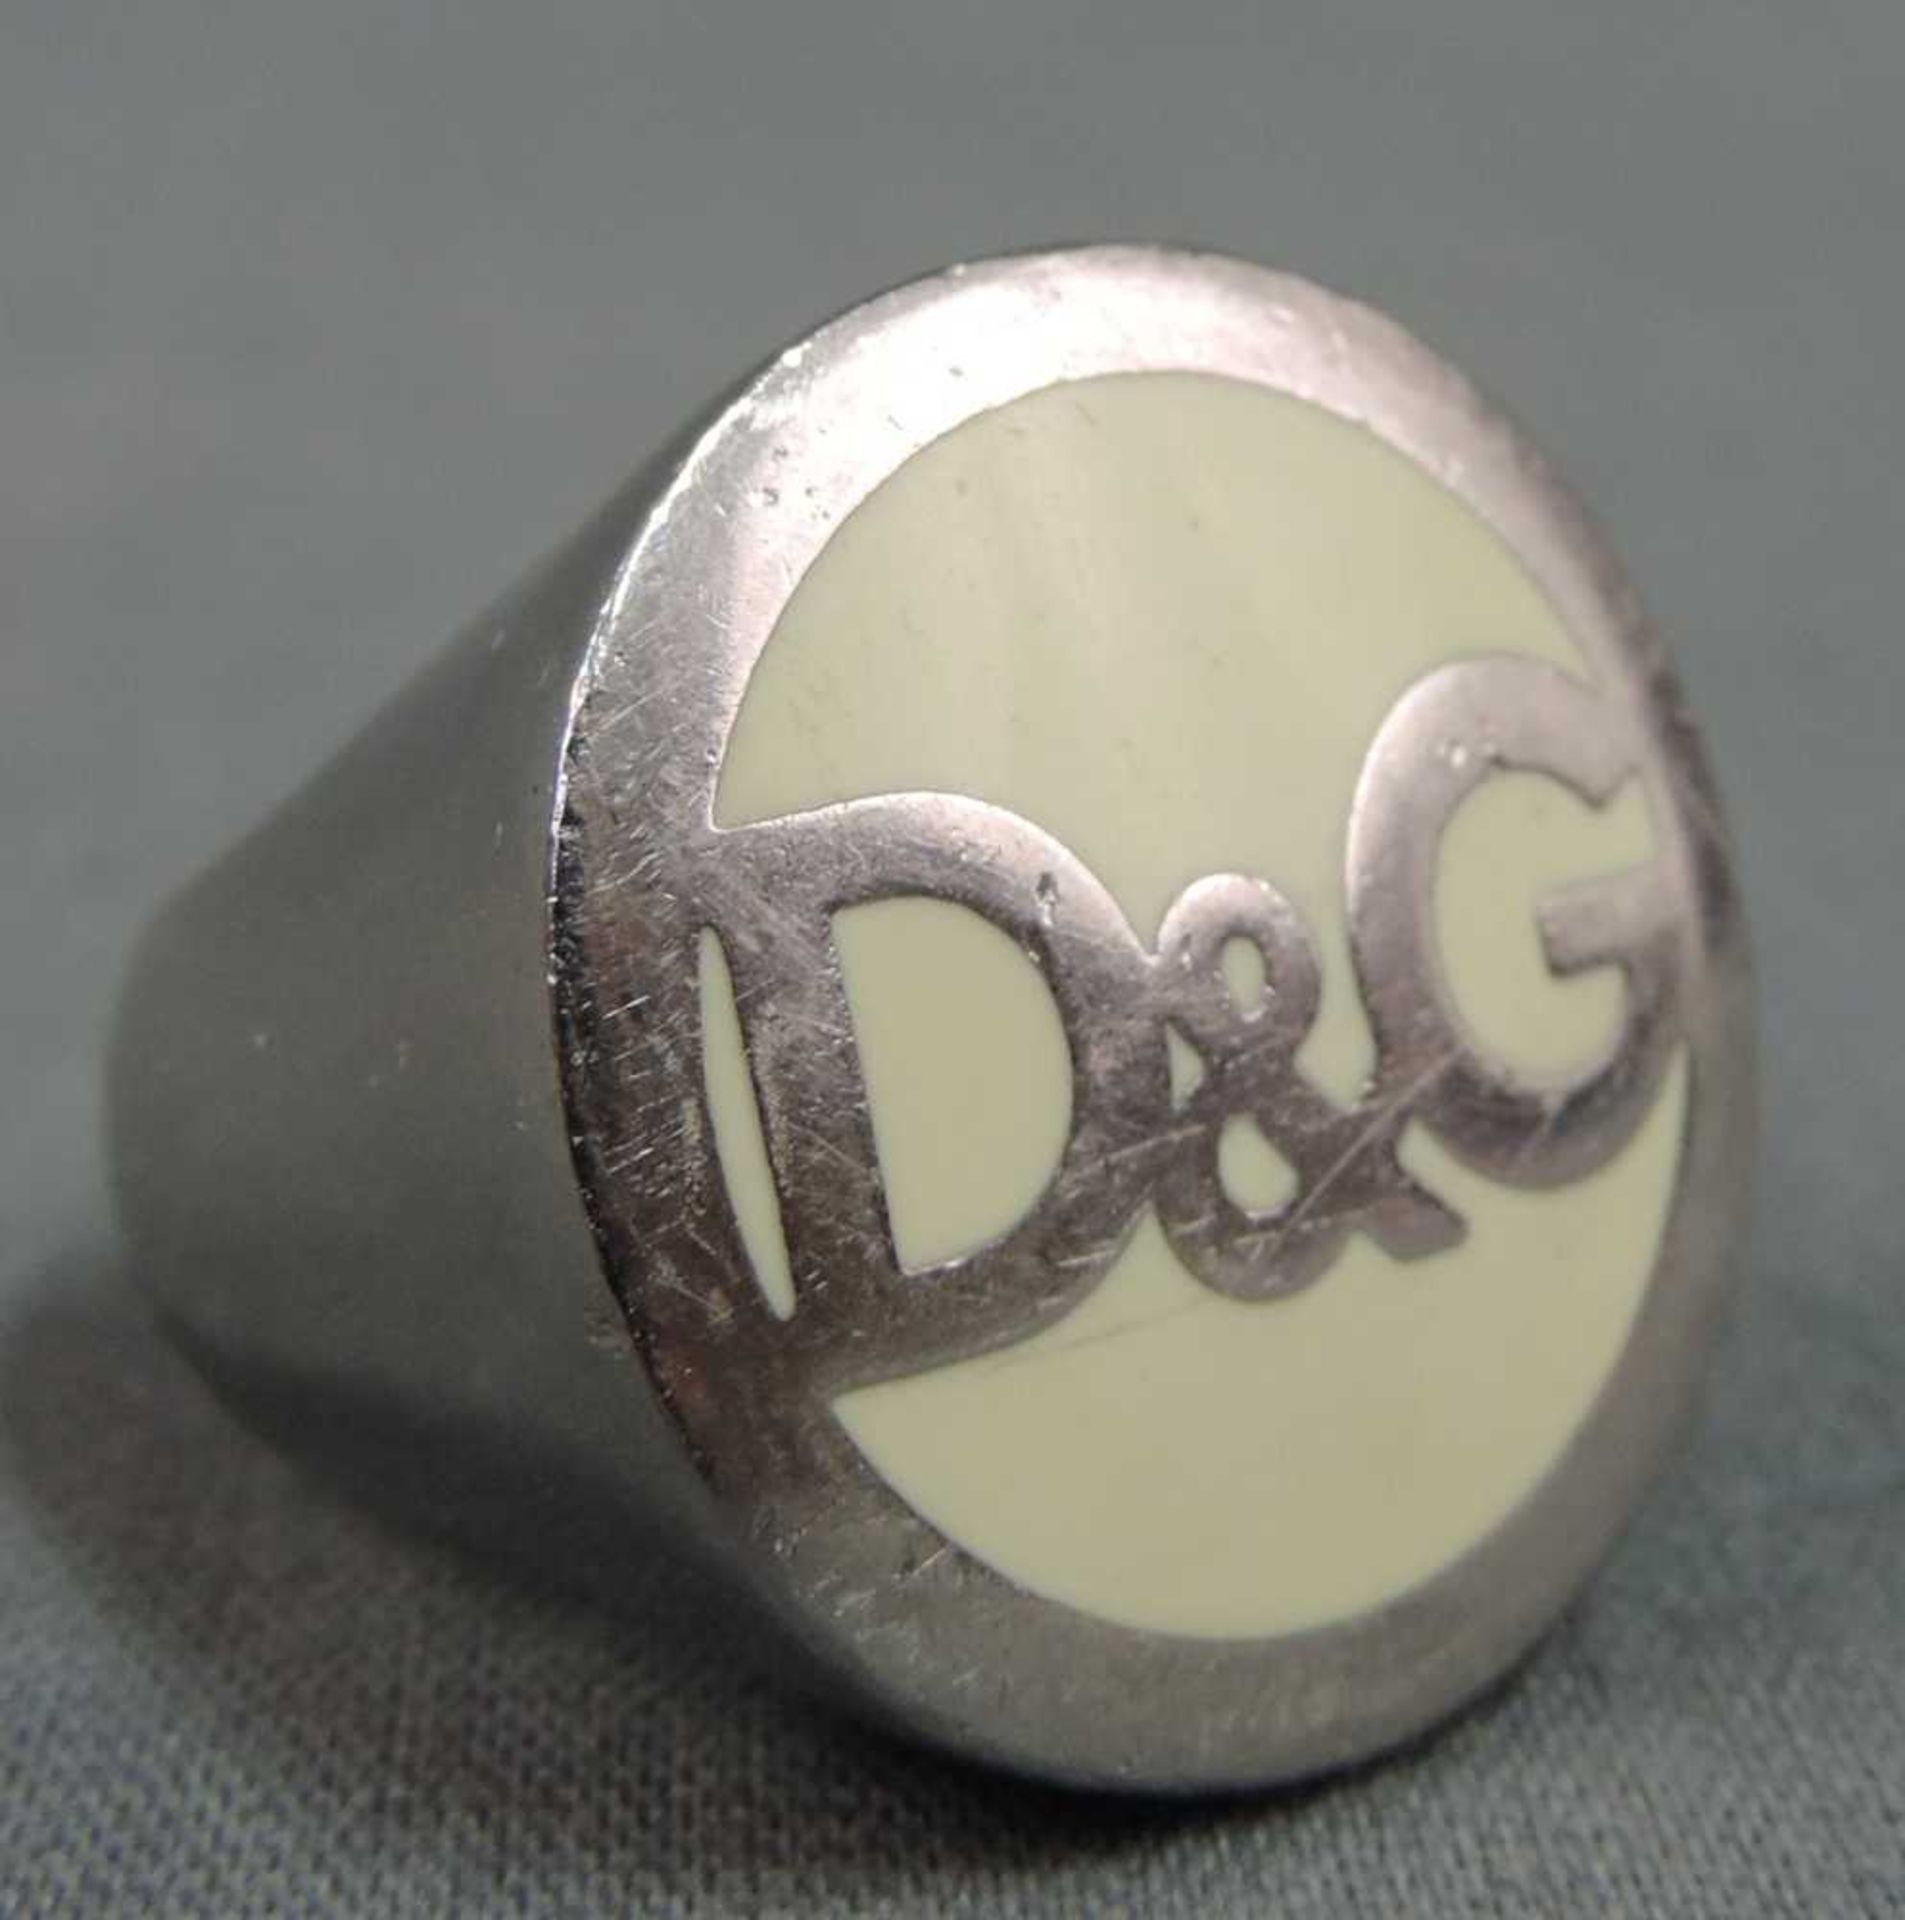 Dolce & Gabbana Ring. Mit Logo. Modeschmuck. Innendurchmesser 18 mm. Dolce & Gabbana ring. With